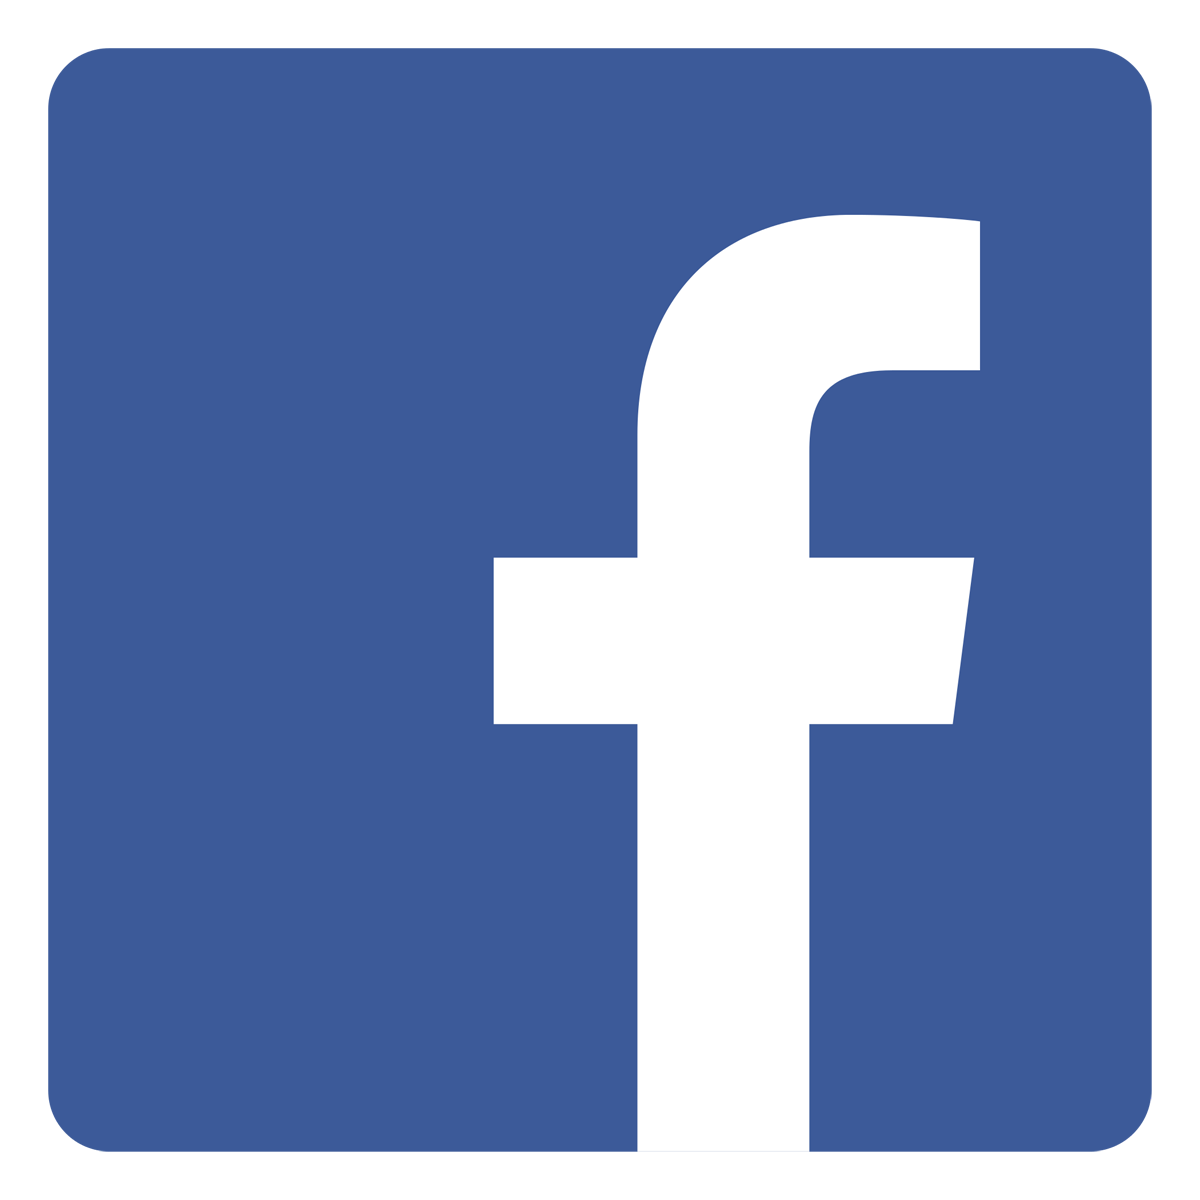 Square Facebook Logo Image Transparente